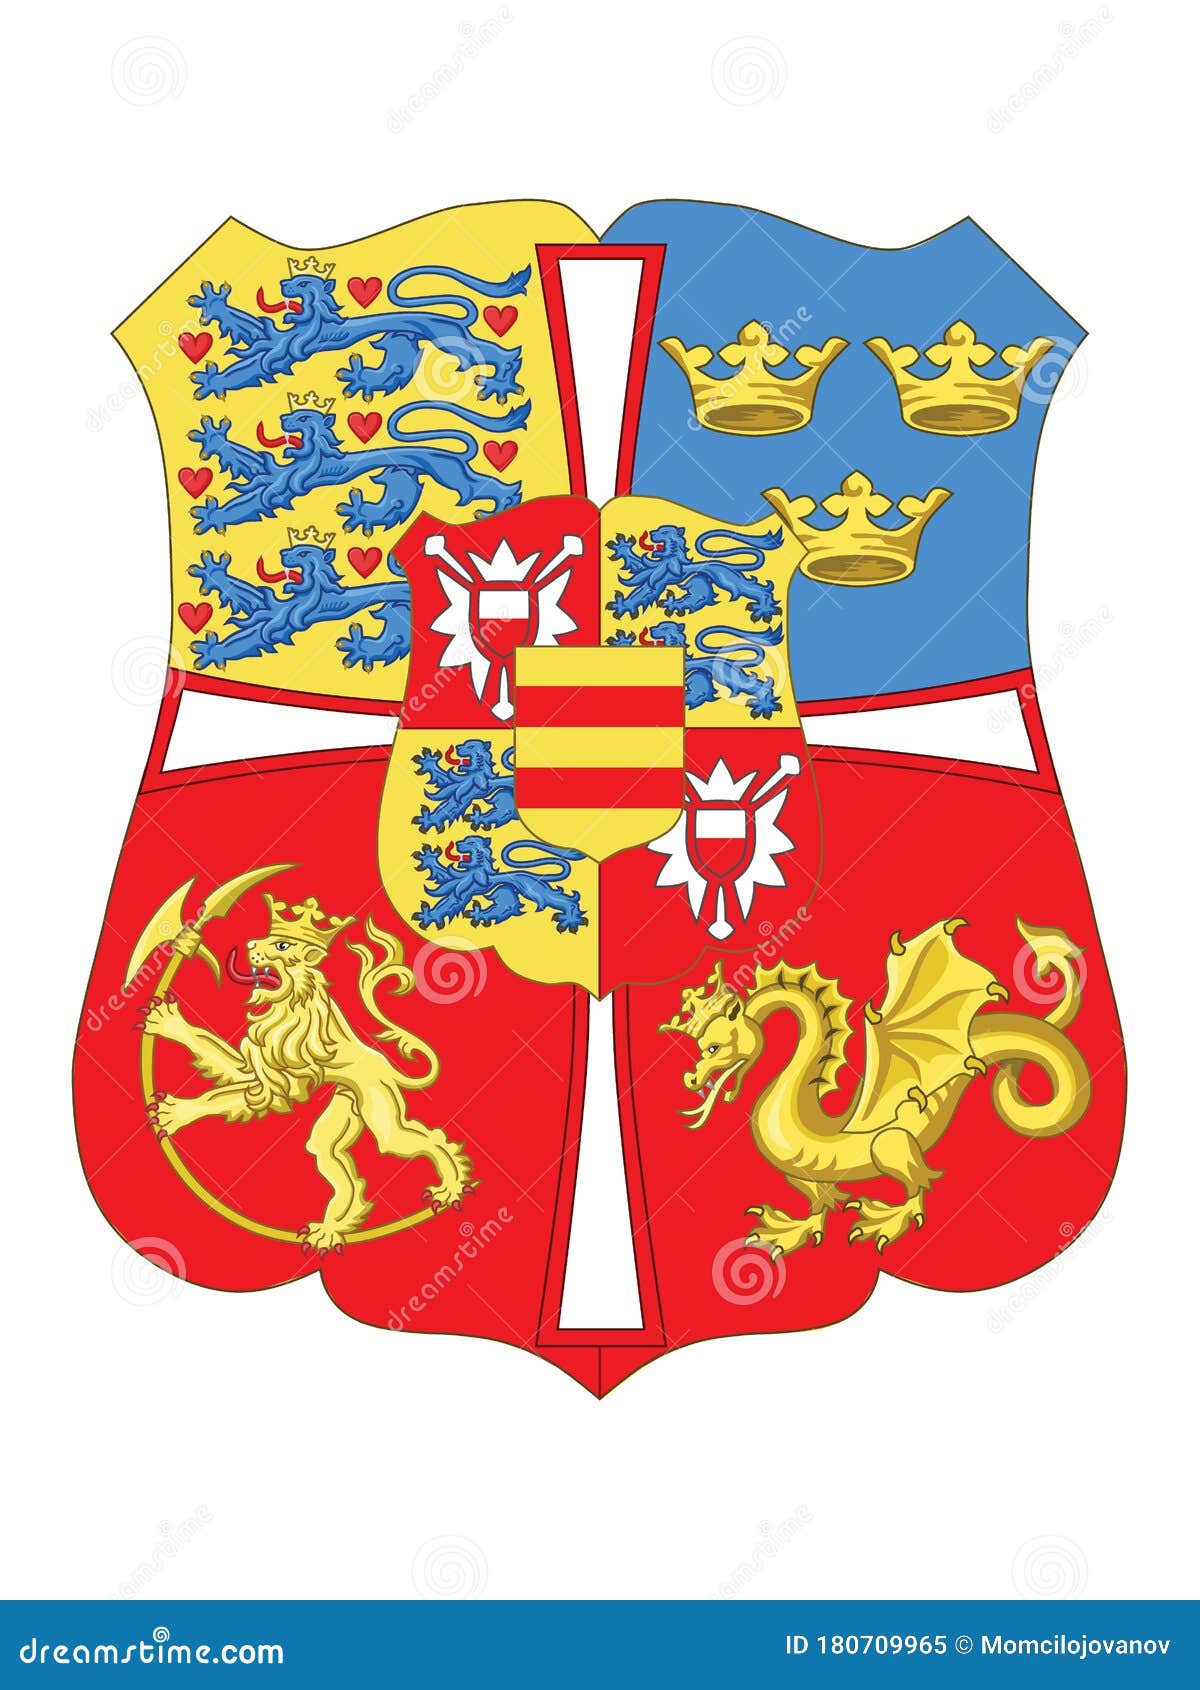 Denmark Kalmar Union 1397 to 1523 Small Hand Waving Flag 